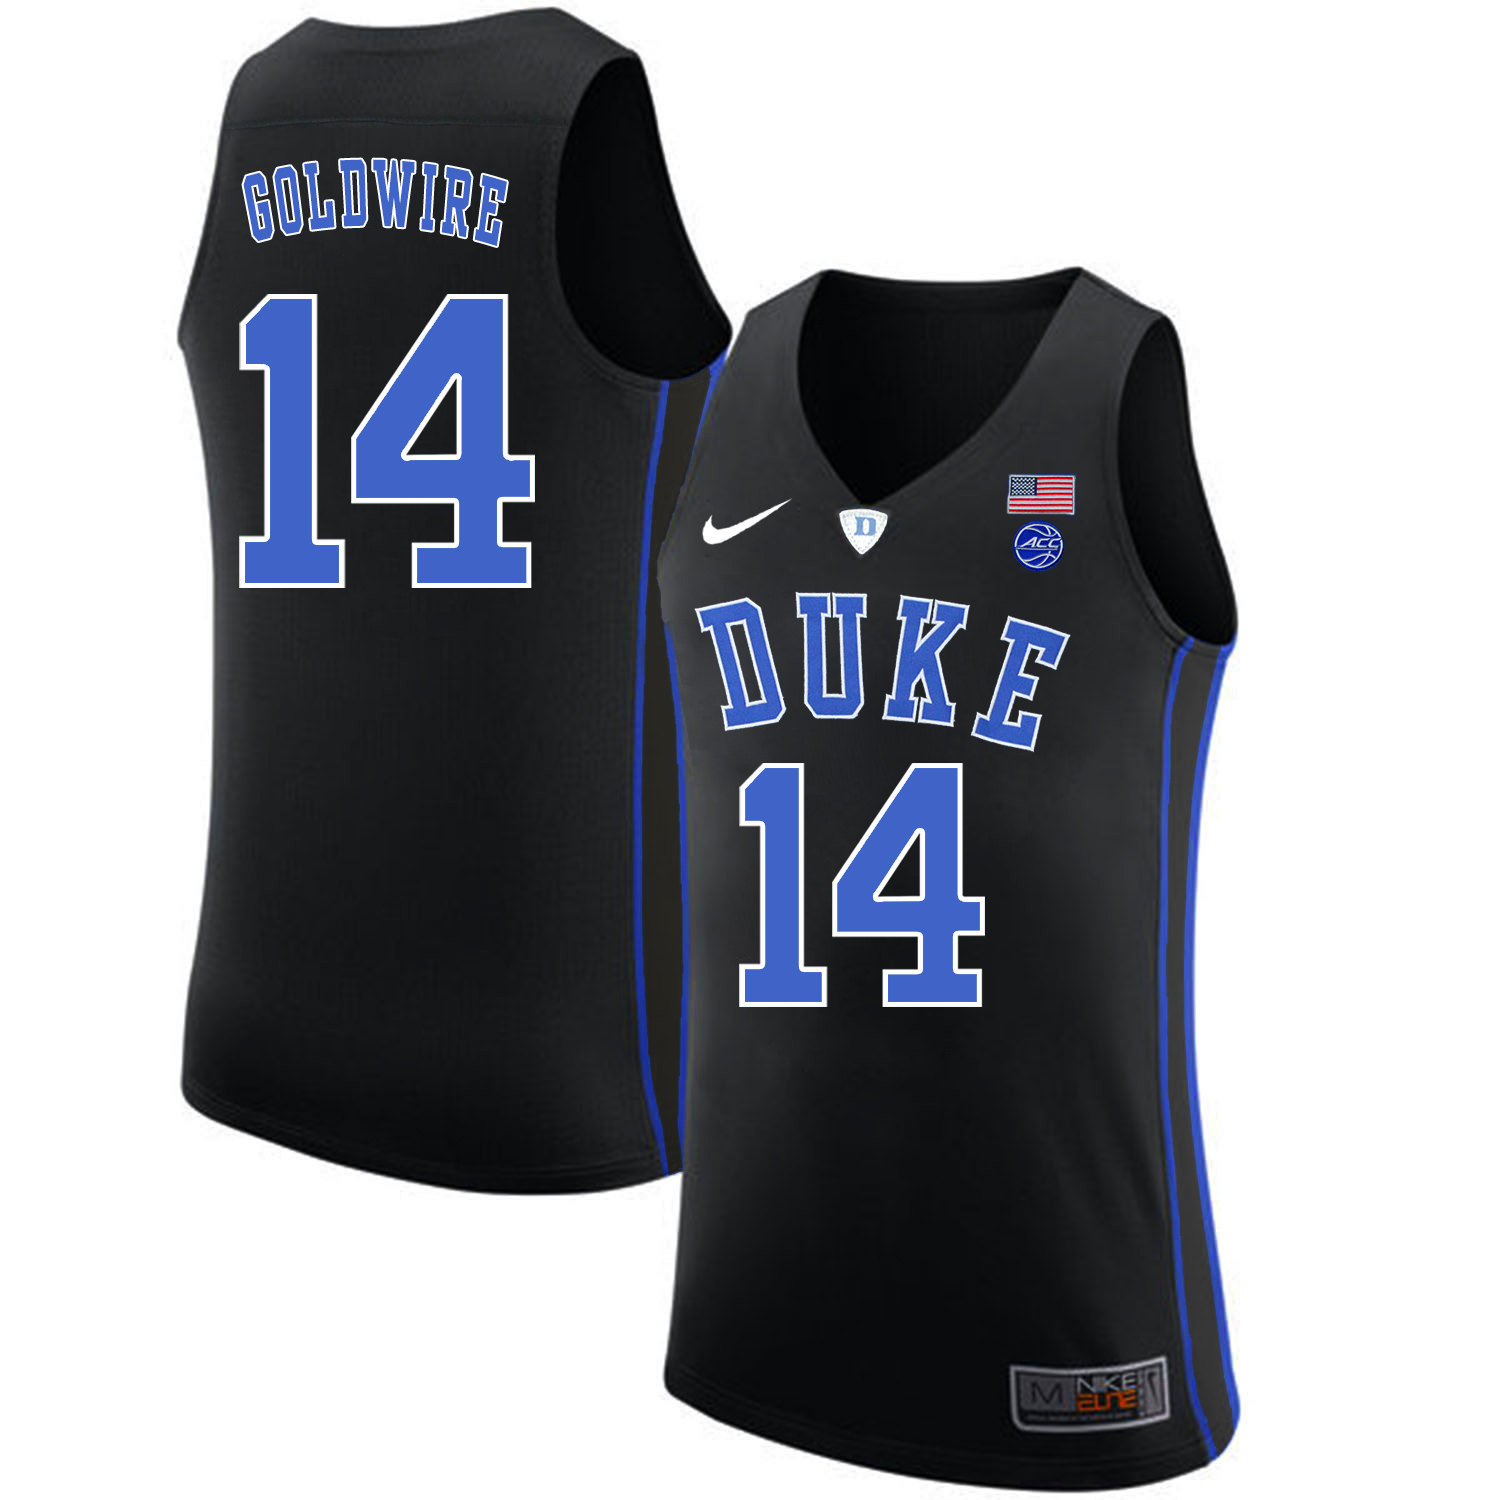 Duke Blue Devils 14 Jordan Goldwire Black Nike College Basketball Jersey